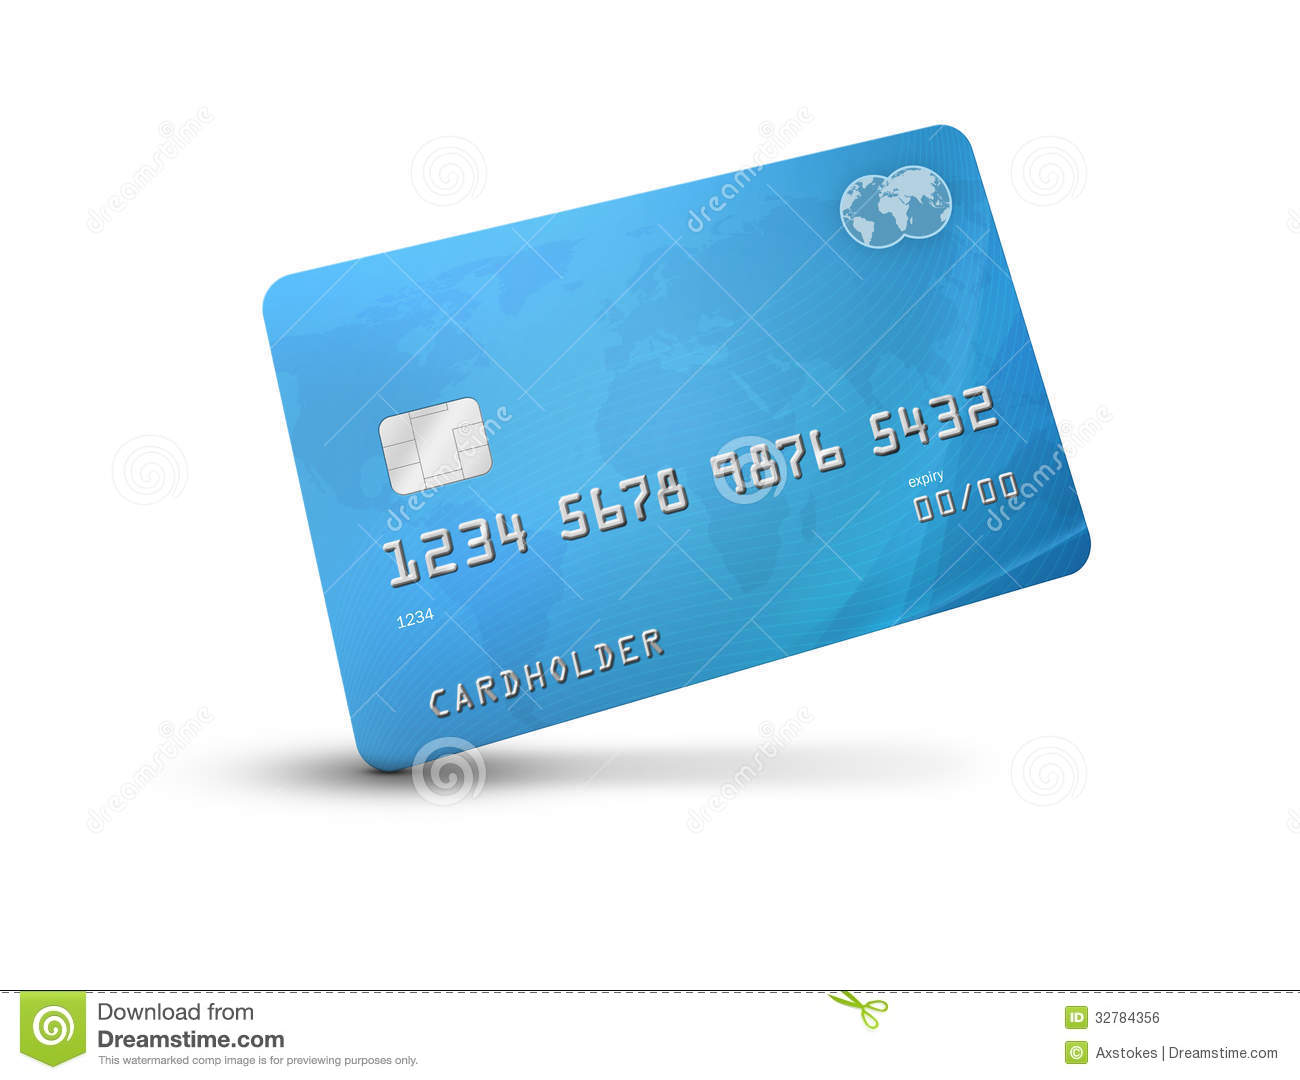 Debit card clipart.